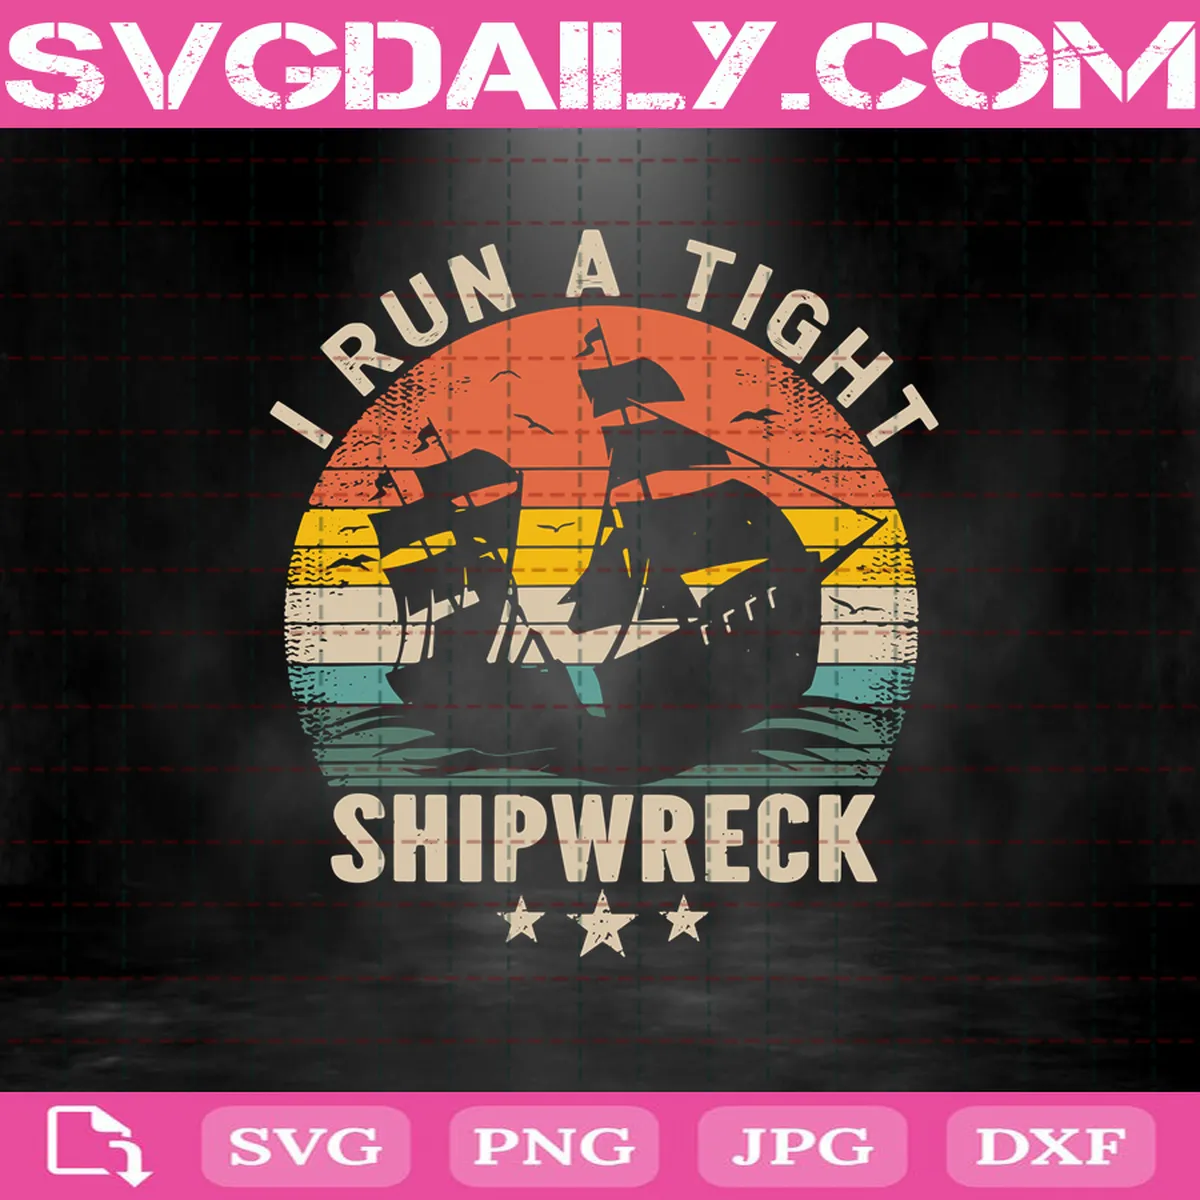 I Run A Tight Shipwreck Svg, Shipwreck Svg, Ship Svg, Svg Png Dxf Eps AI Instant Download